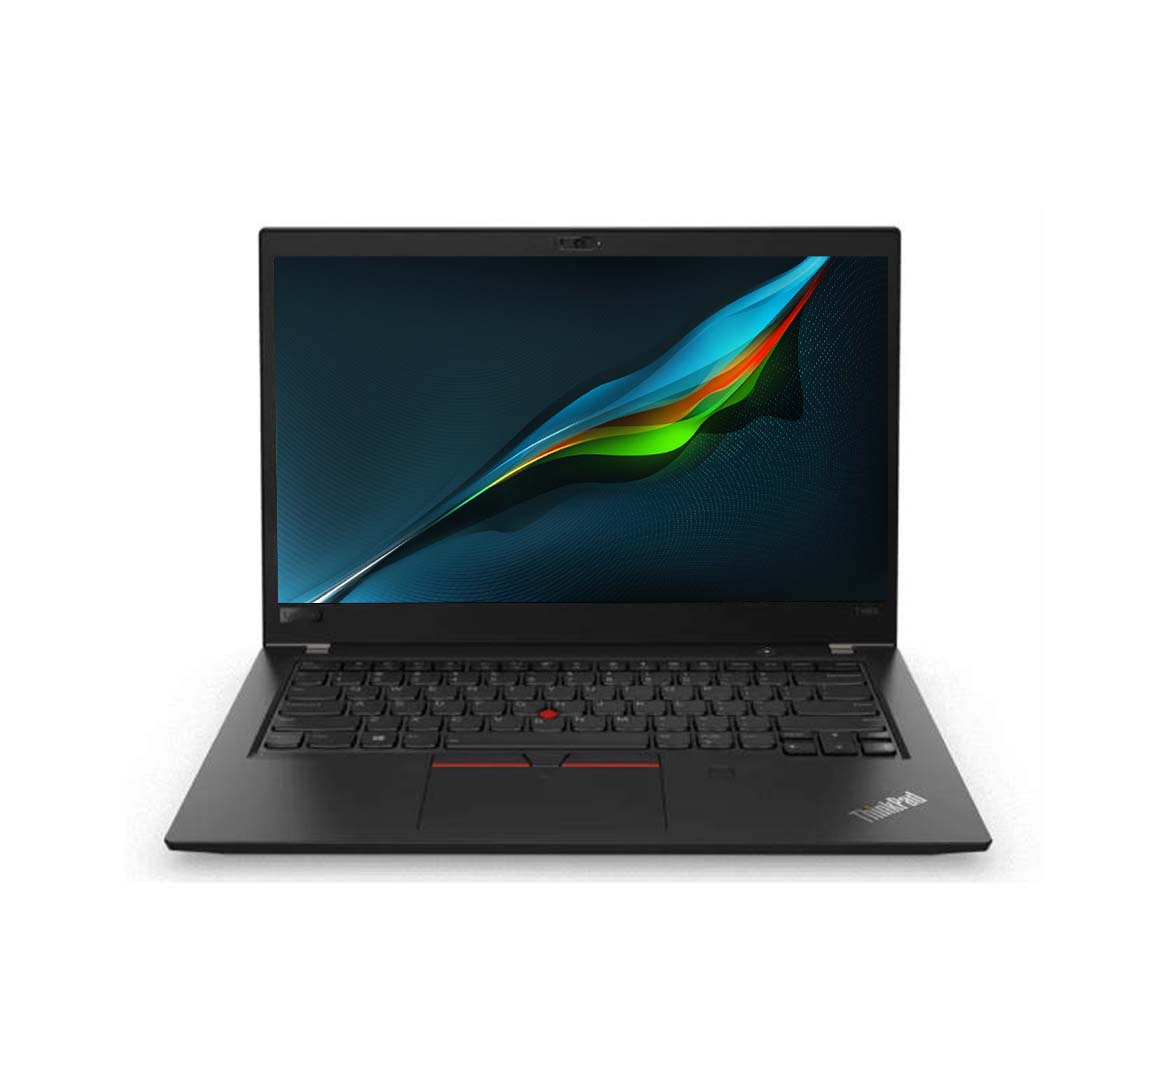 Lenovo Thinkpad T480 Business Laptop, Intel Core i5-8th Generation CPU, 8GB RAM, 256GB SSD, 14 inch Display, Windows 10 Pro